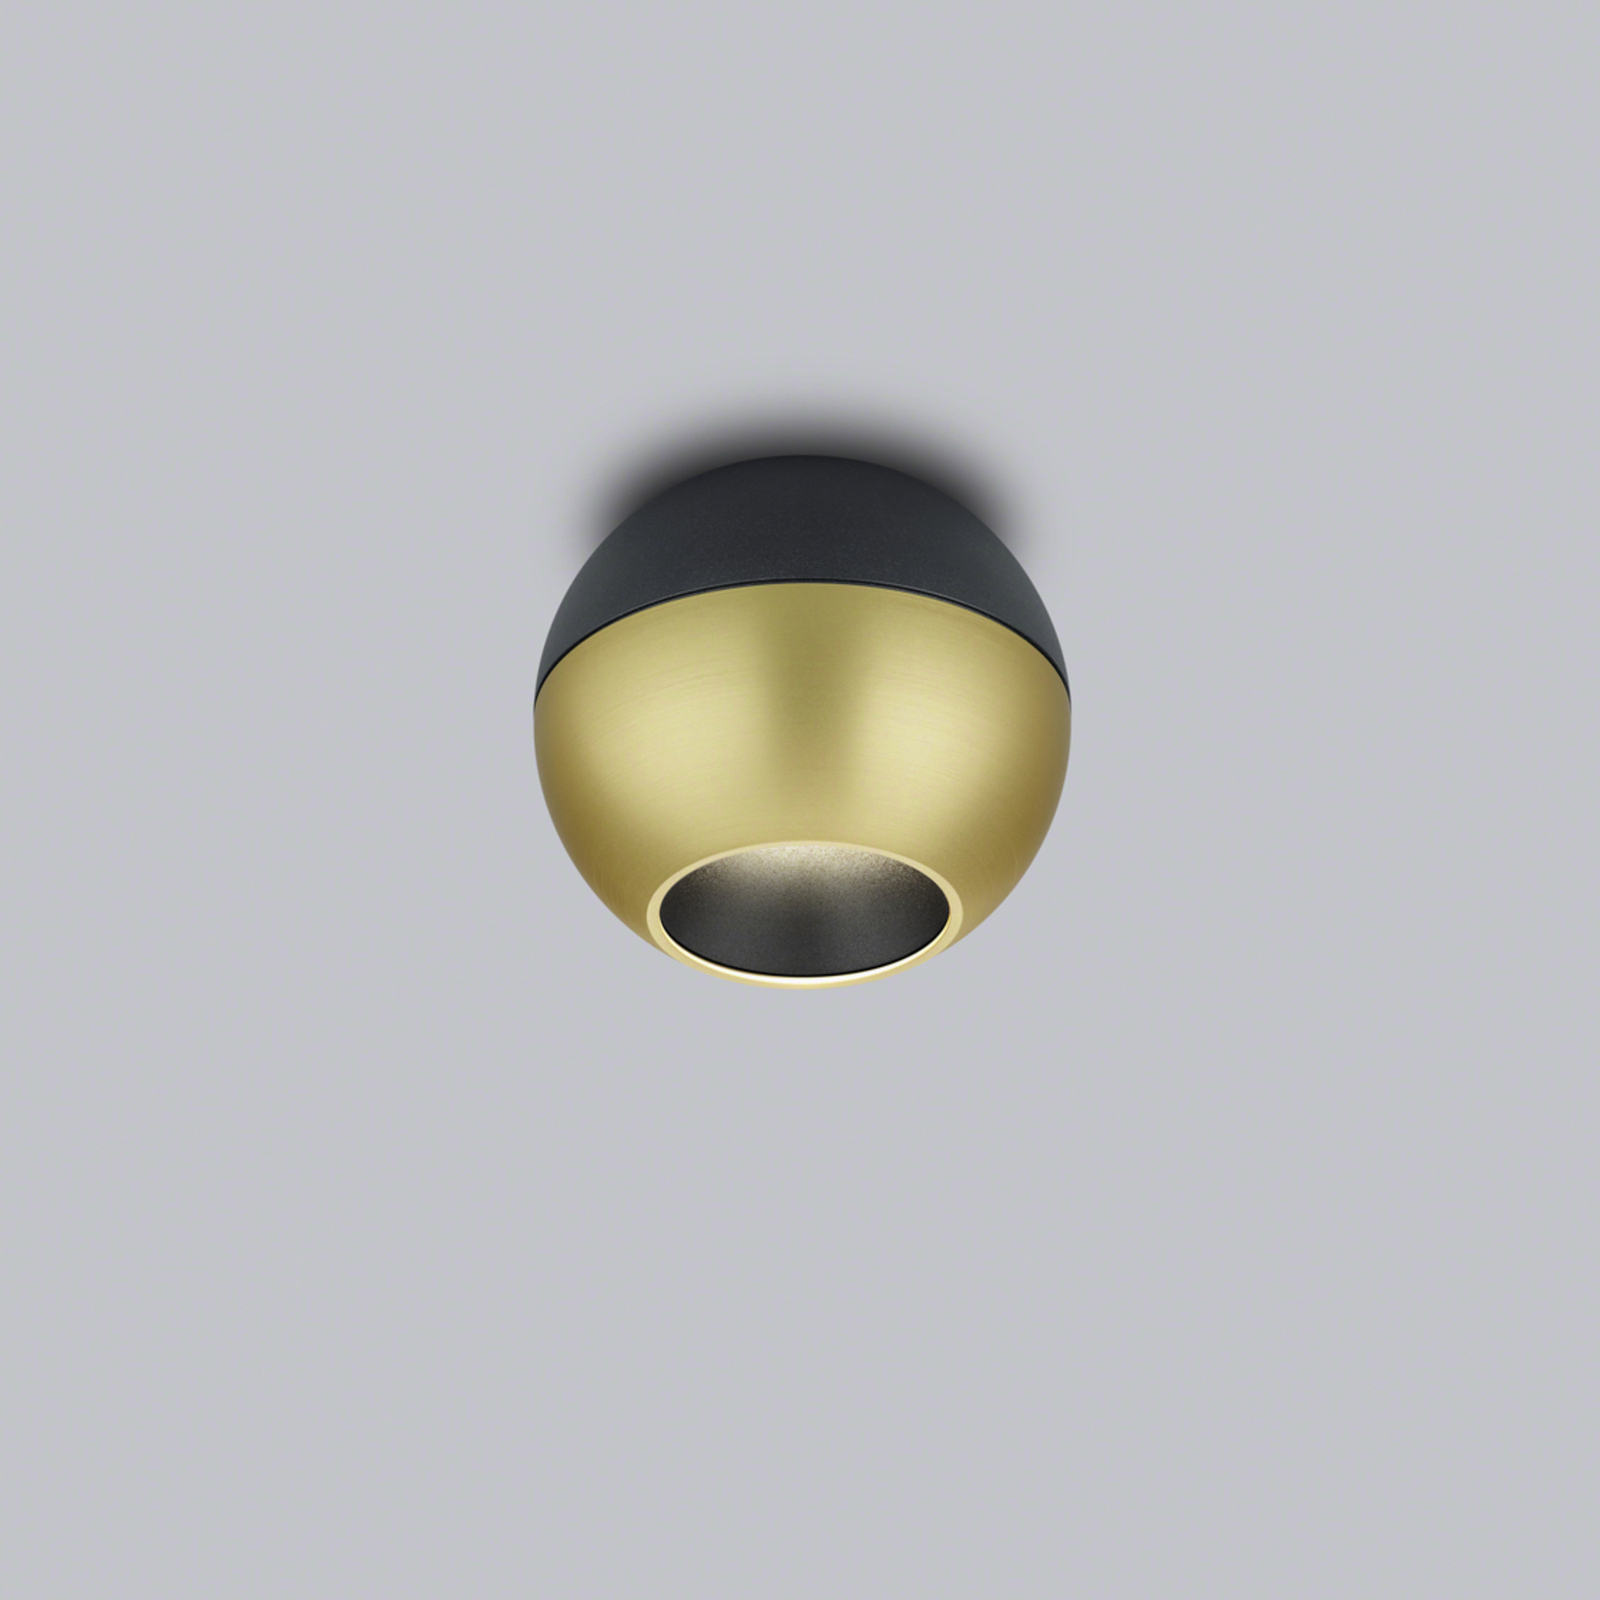 Helestra Eto LED downlight Ø 10 cm 927 gold black